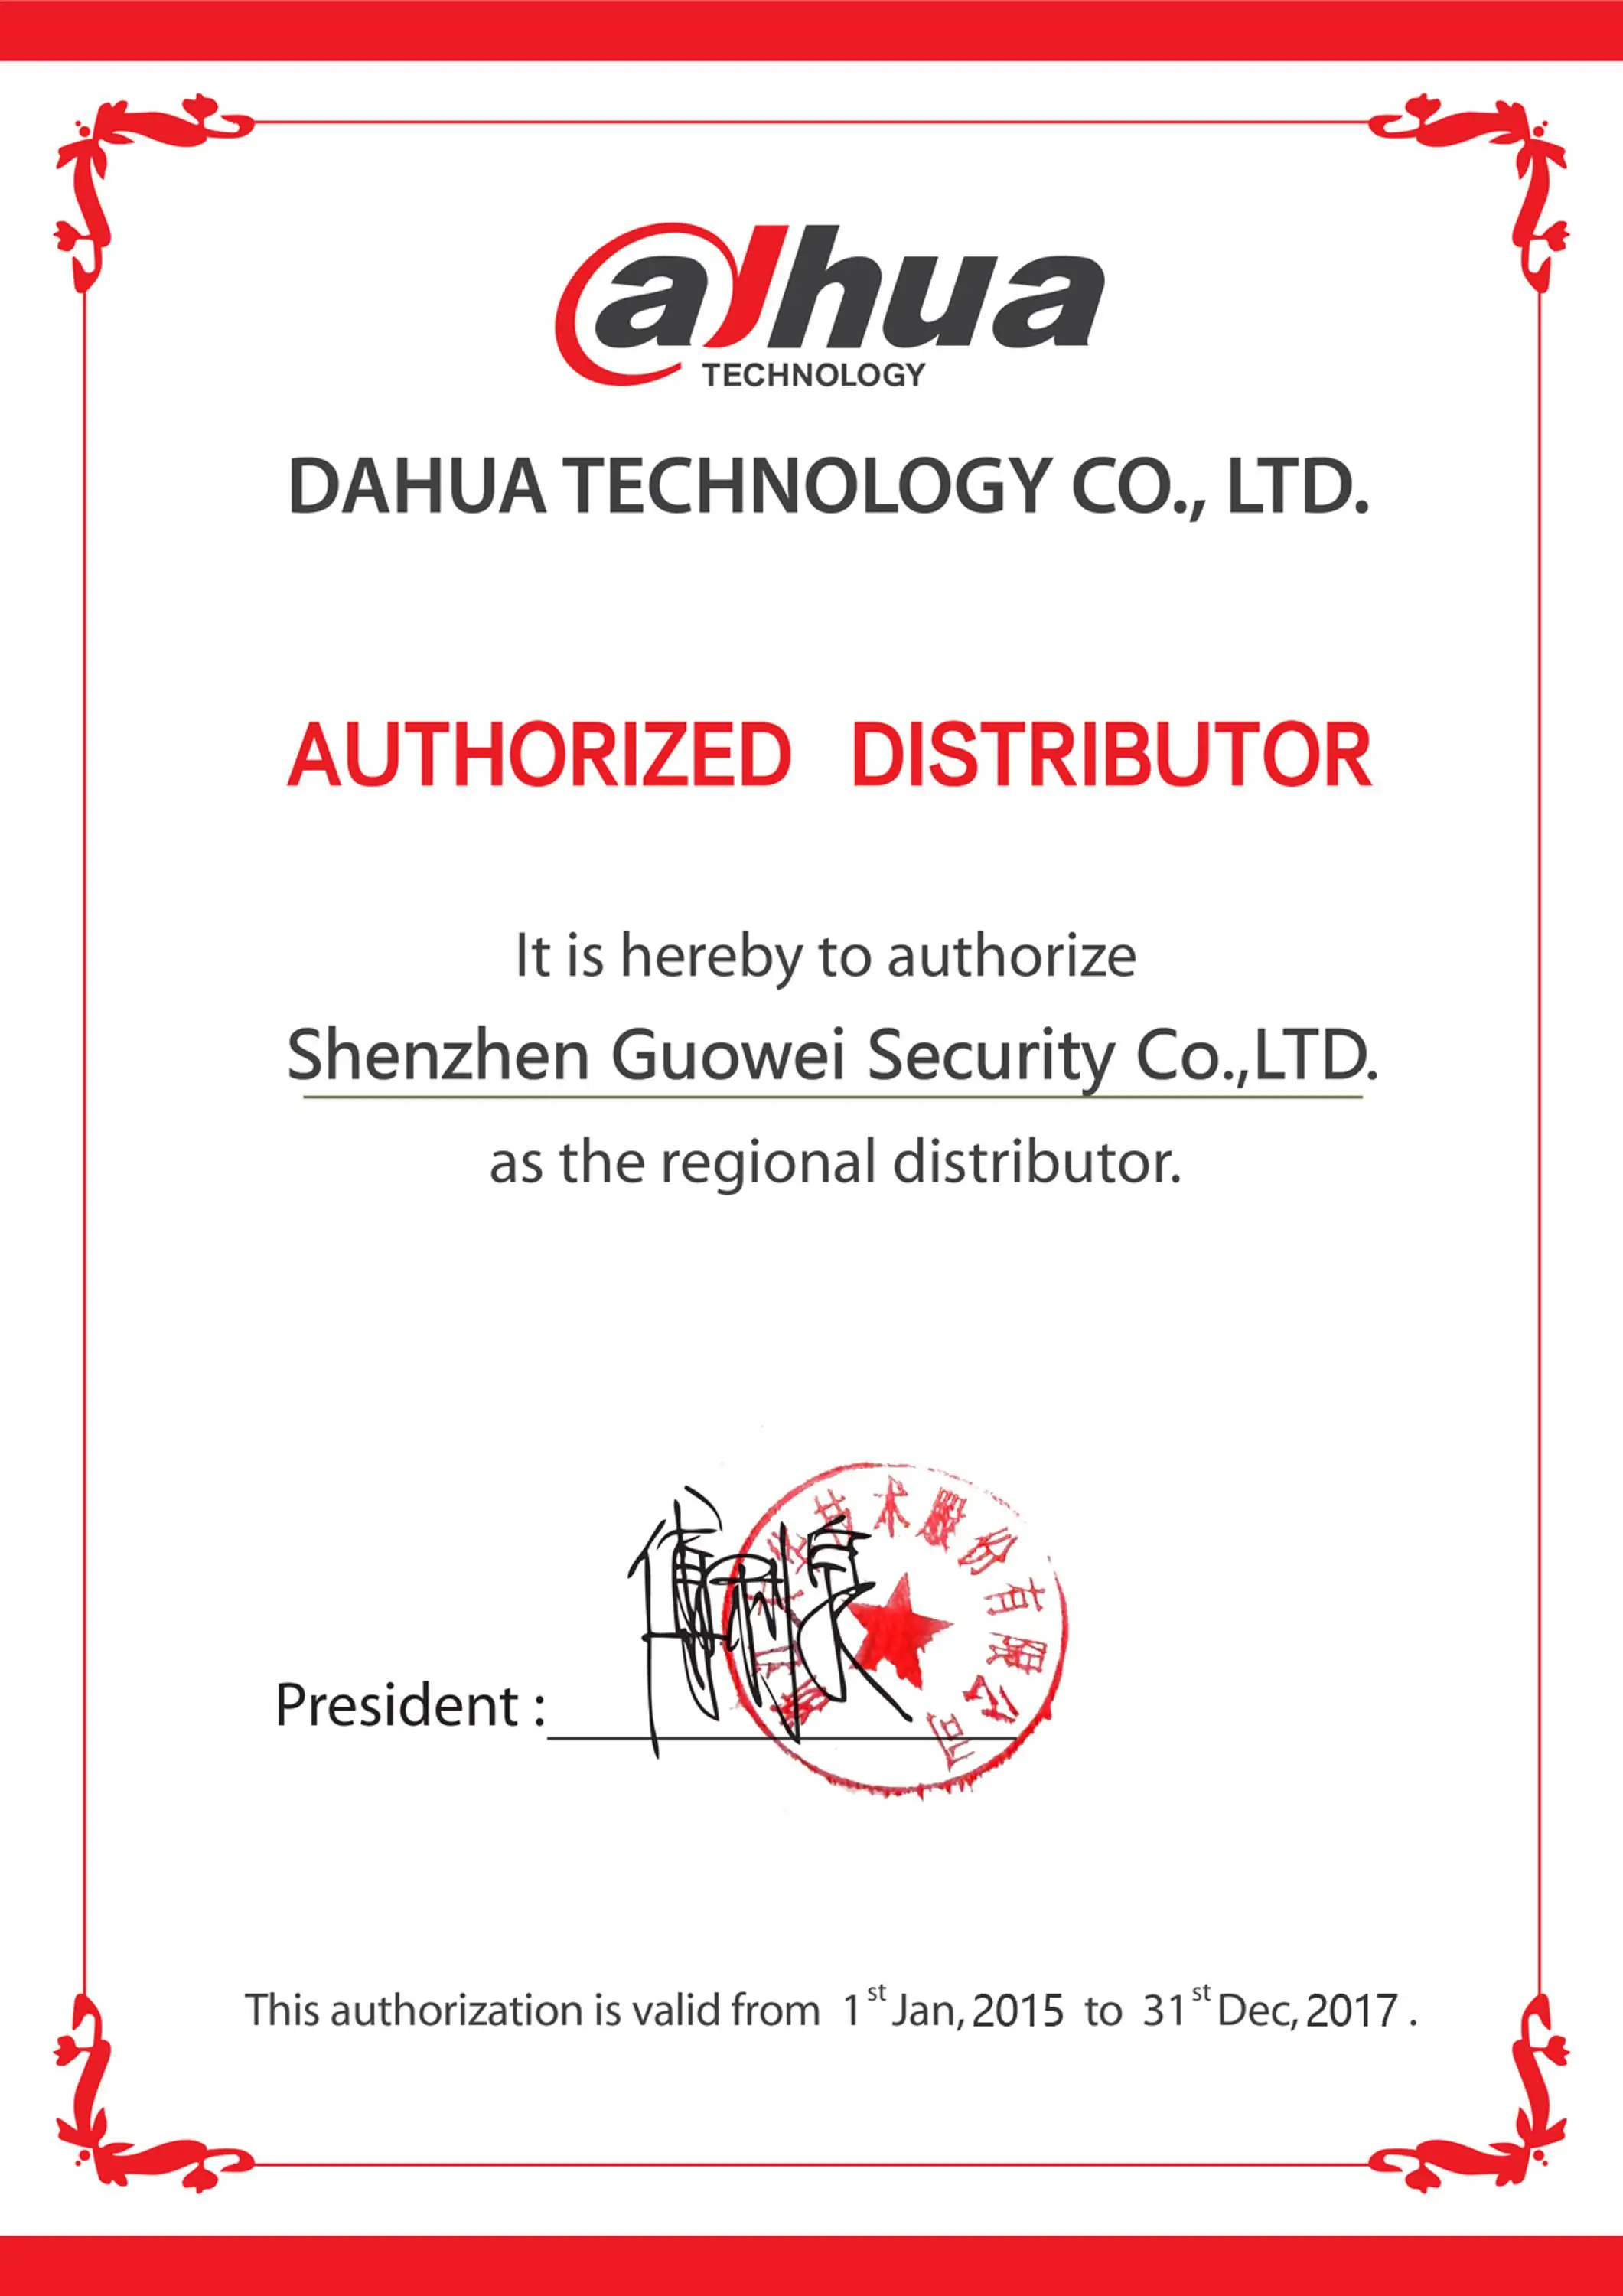 dahua authorized distributors